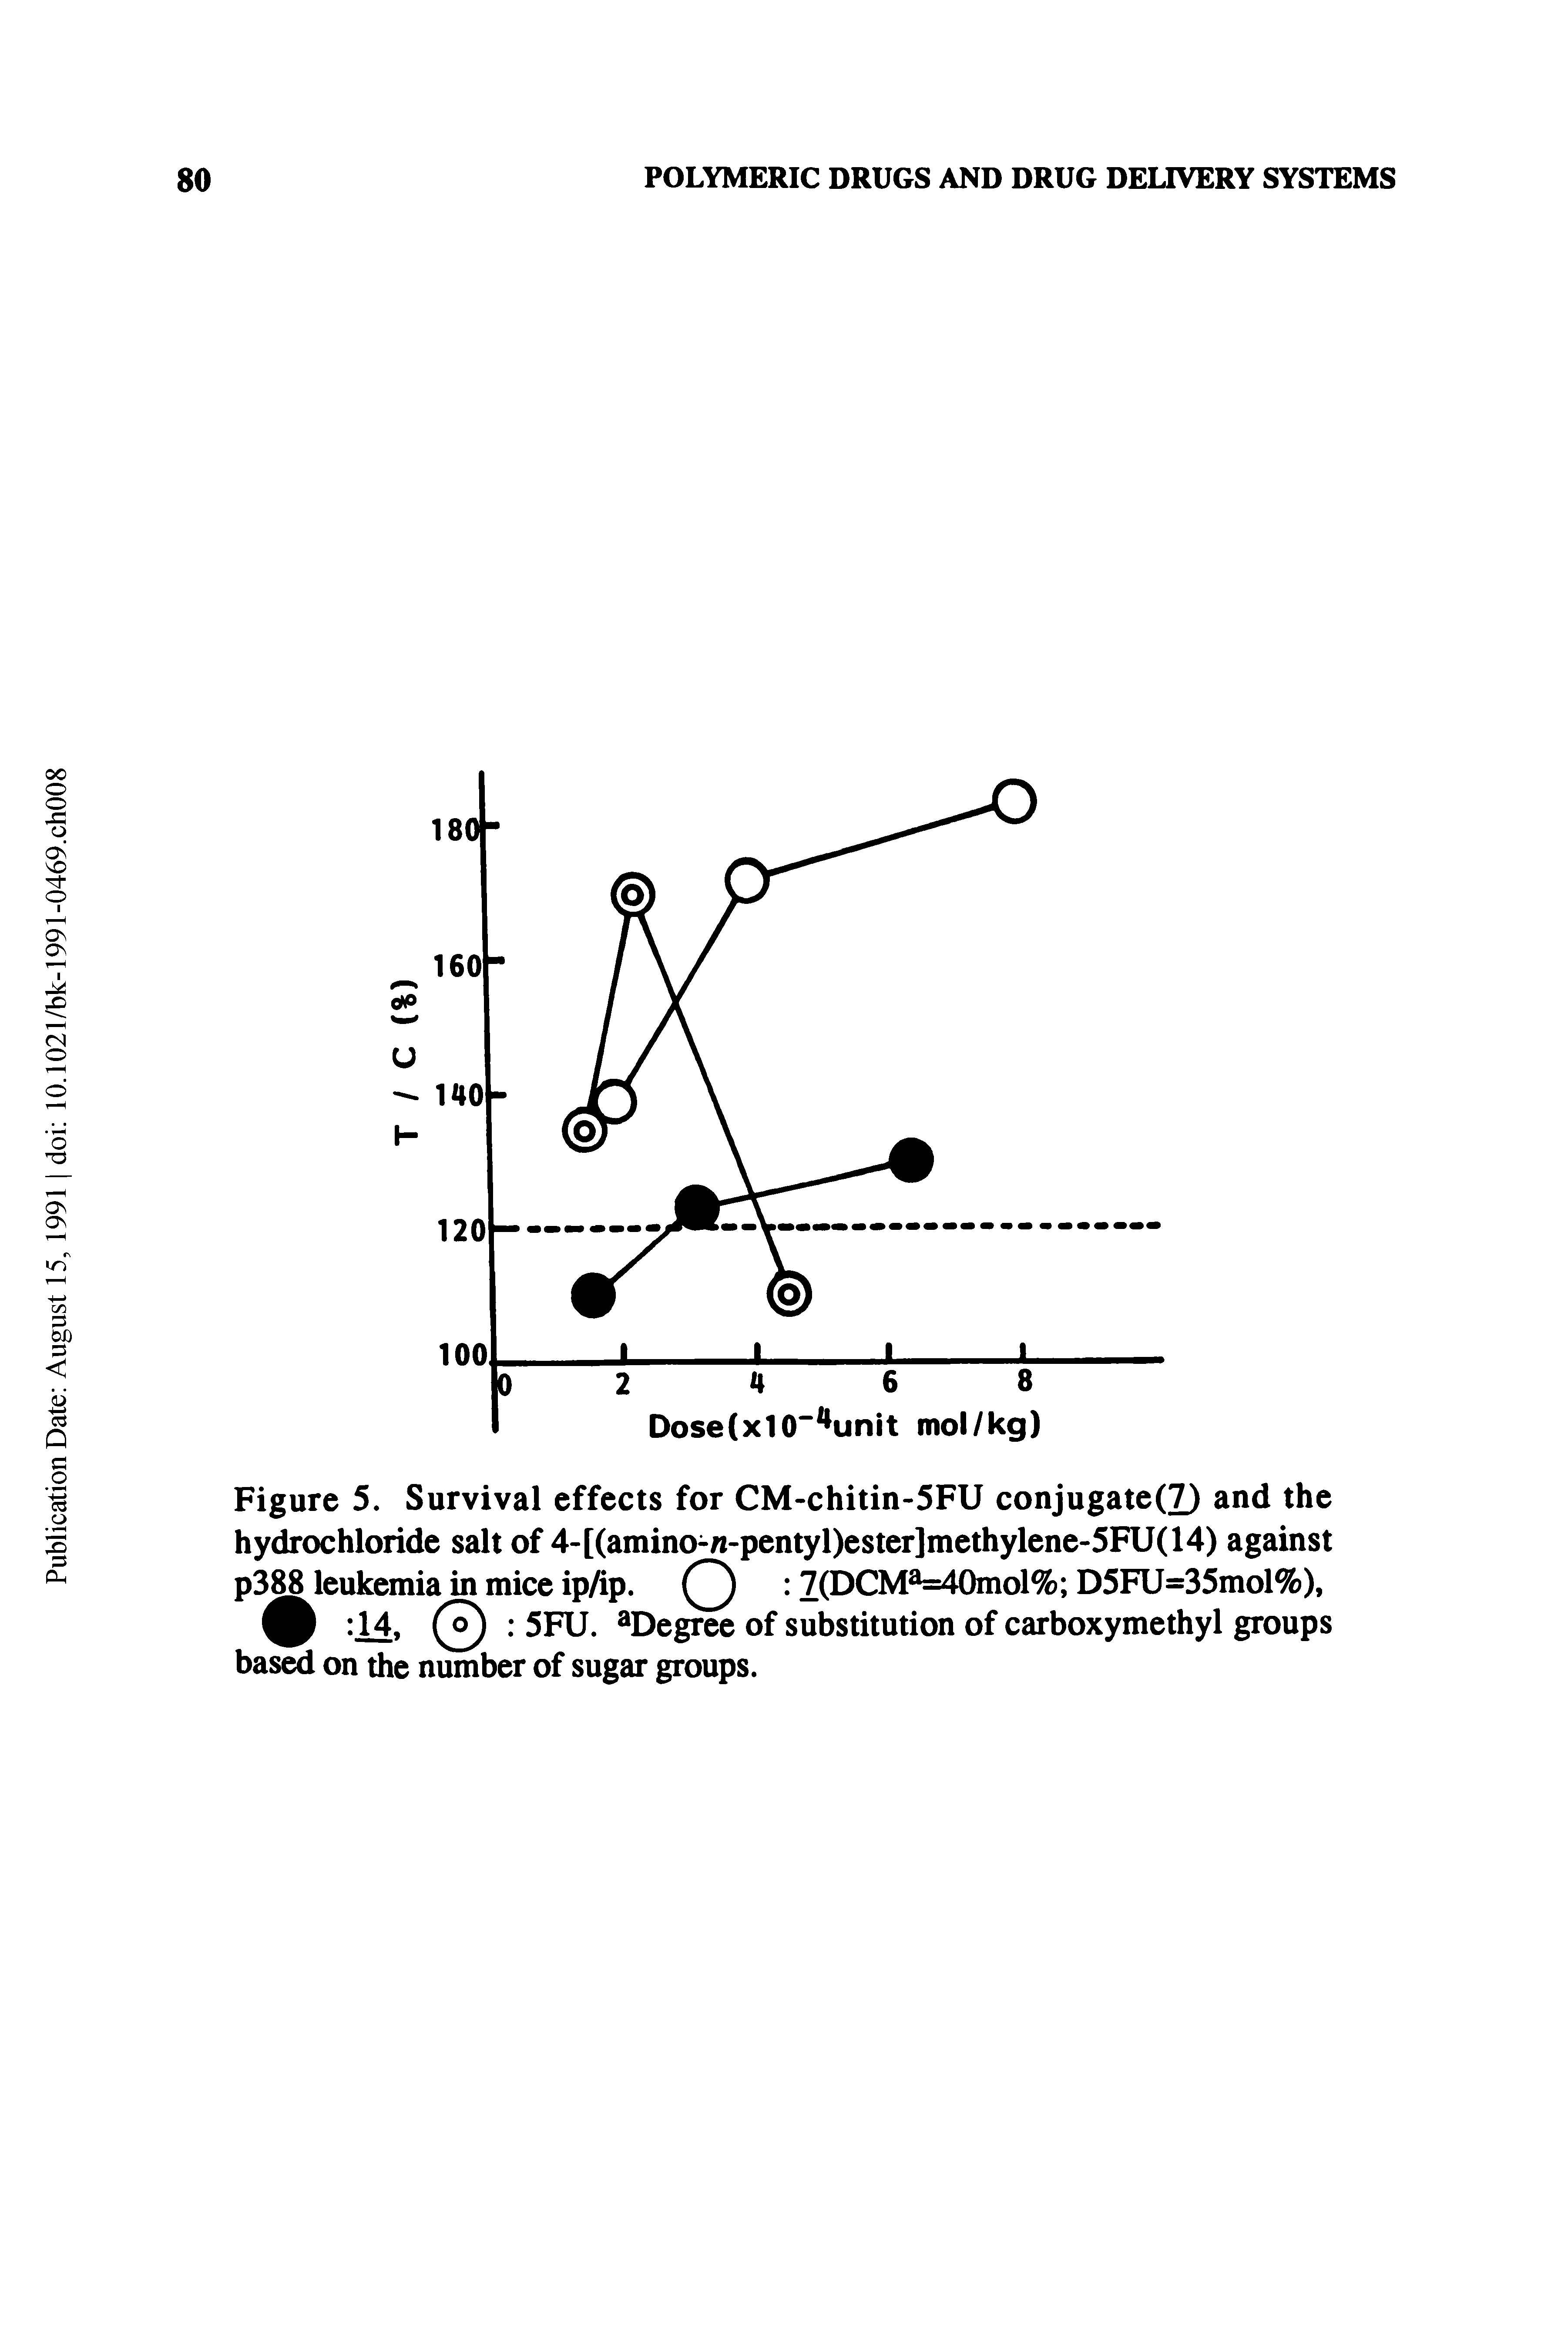 Figure 5. Survival effects for CM-chitin-5FU conjugate(7) and the hydrochloride salt of 4-[(amino-n-pentyl)ester]methylene-5FU(14) against p3 8 leukemia in mice ip/ip. 7(DCM Omol fc D5FU=35mol%),...